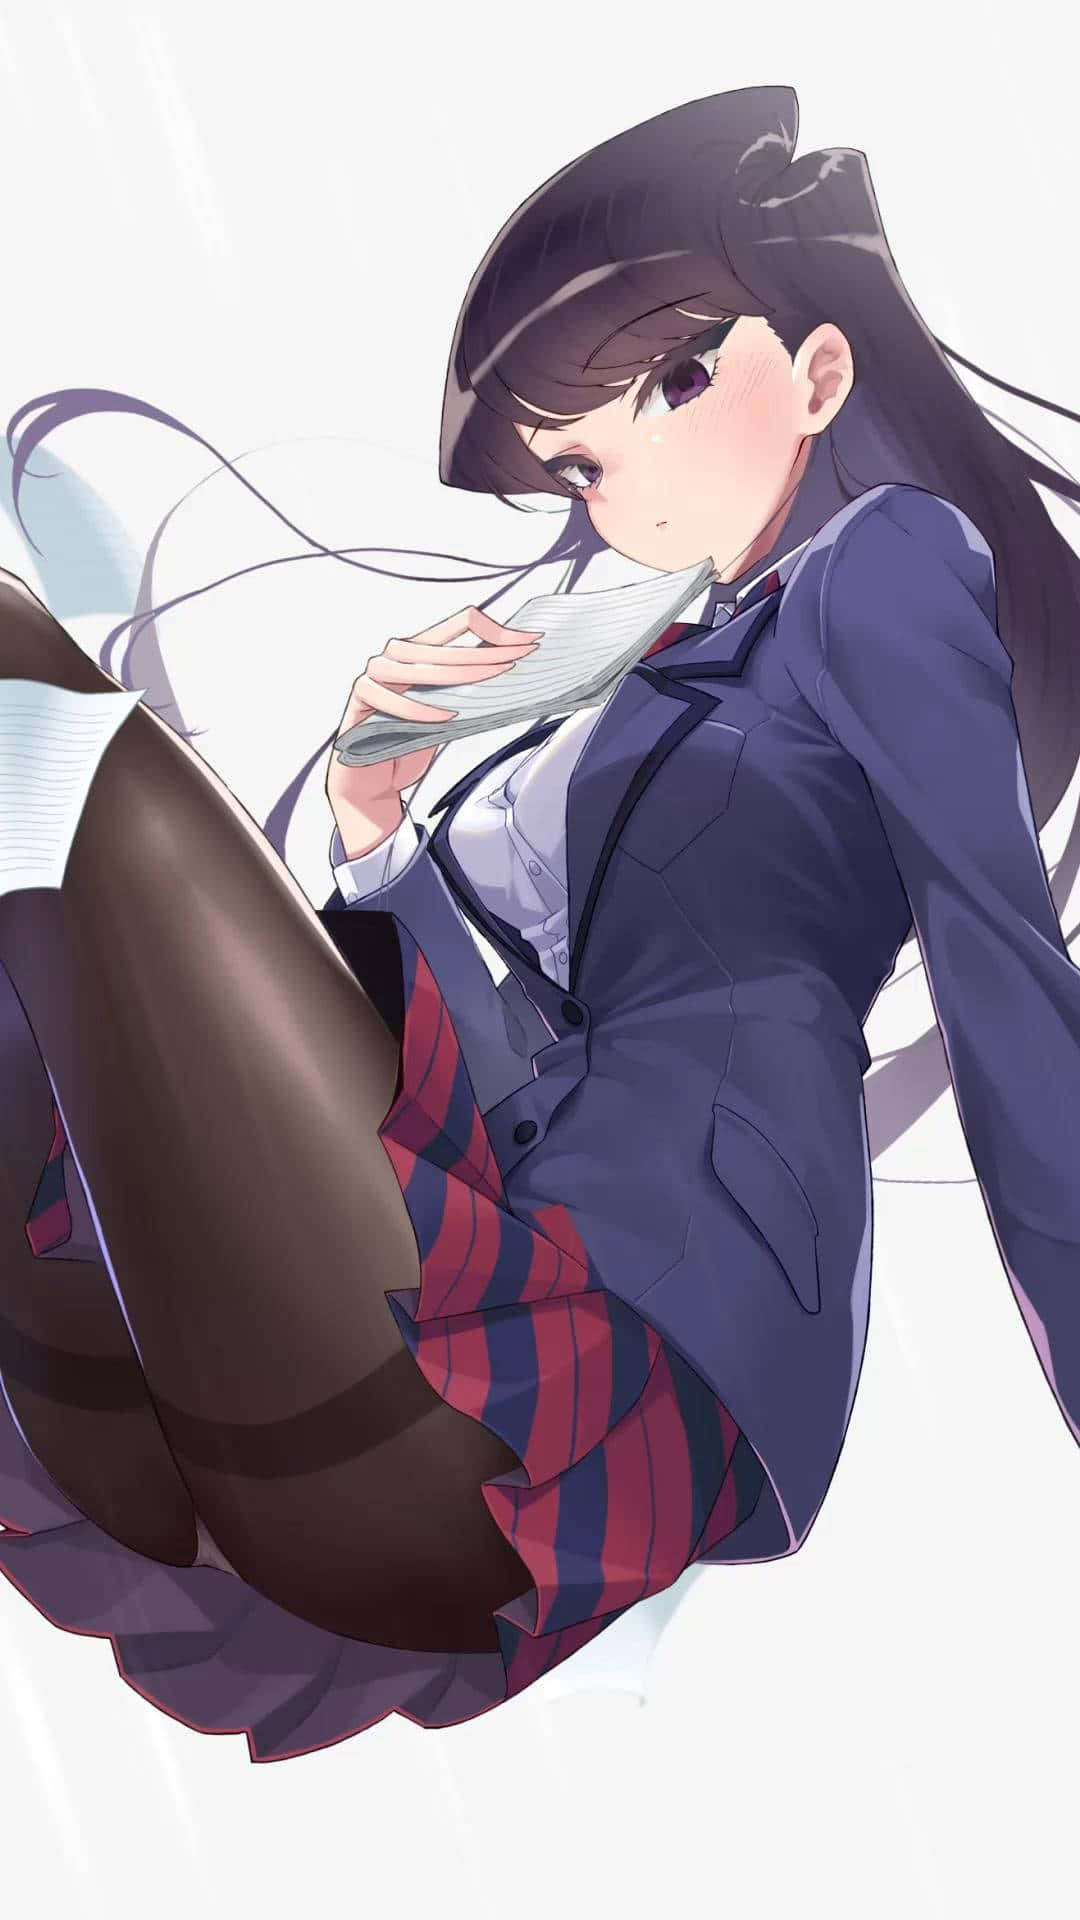 Hot Anime Komi Shouko Uniform Background